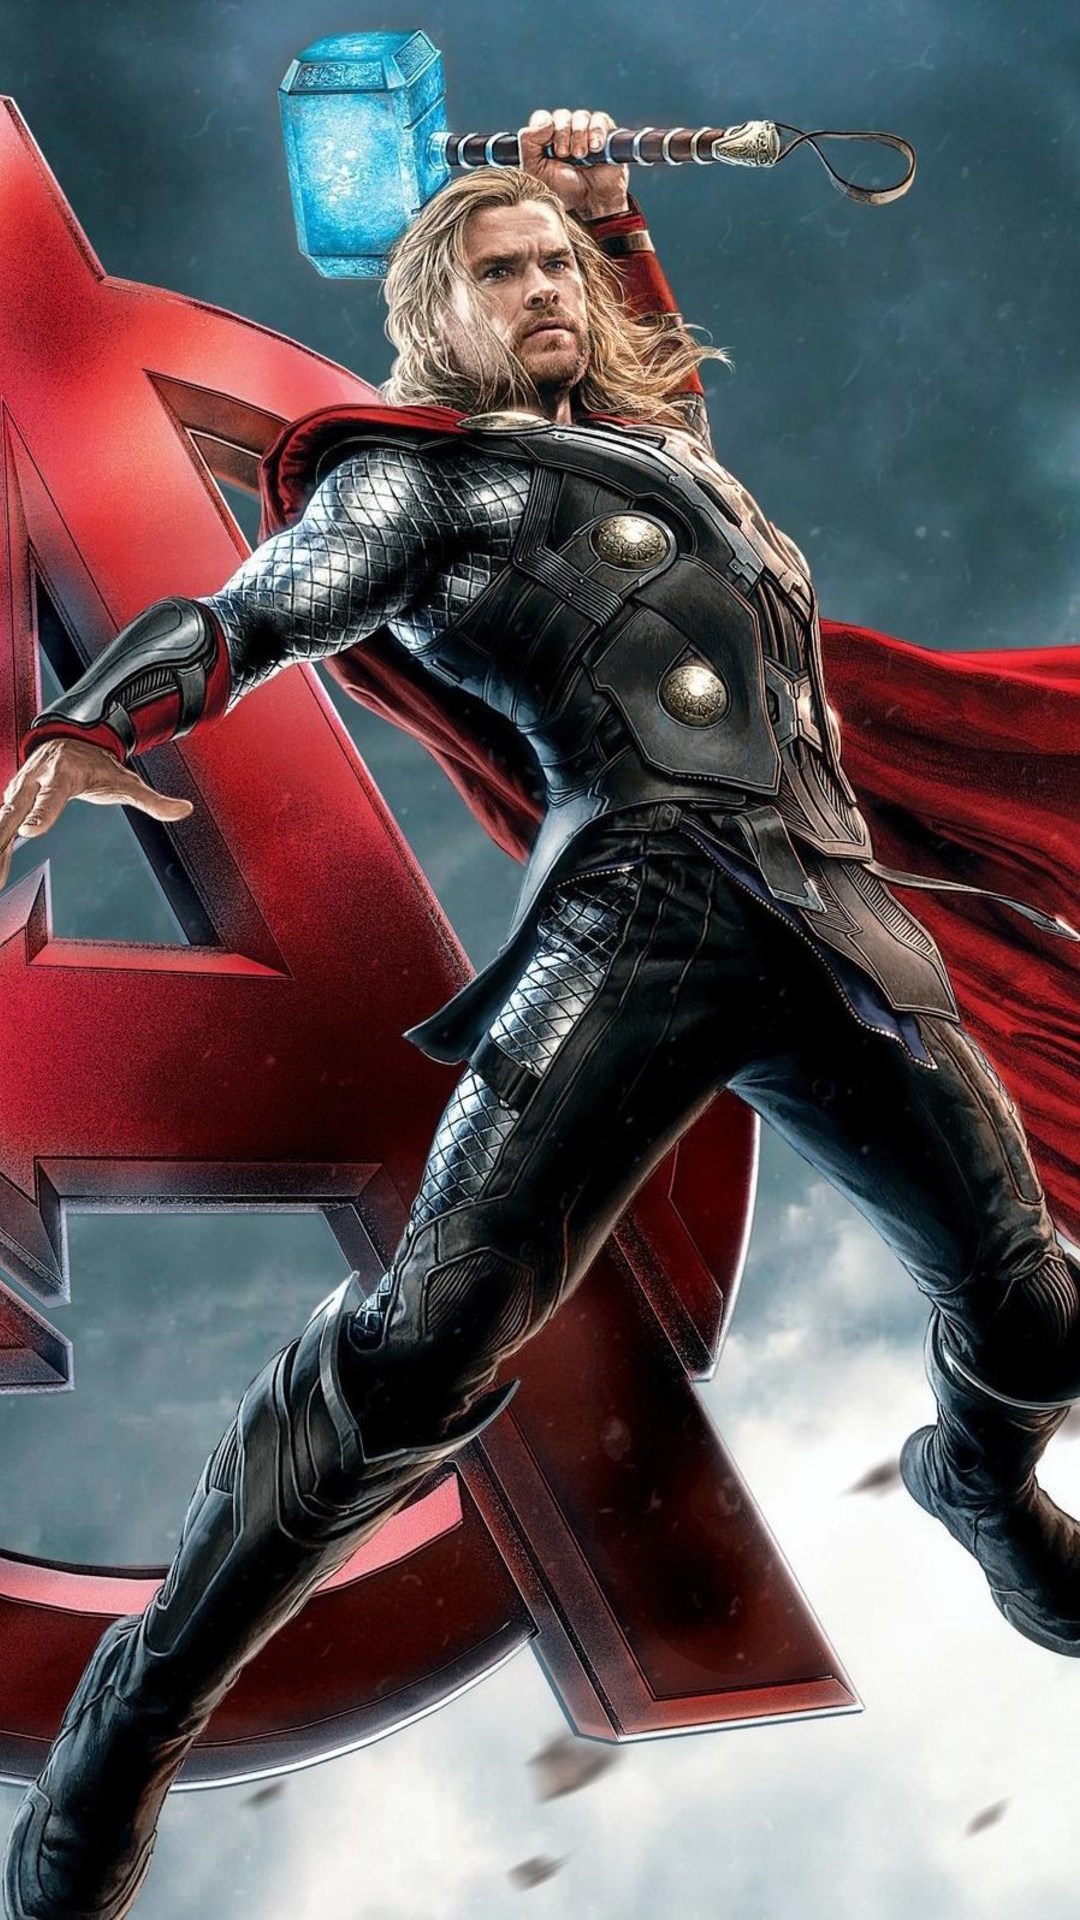 Thor Avengers - Avengers Thor Photo Download - 1080x1920 Wallpaper -  